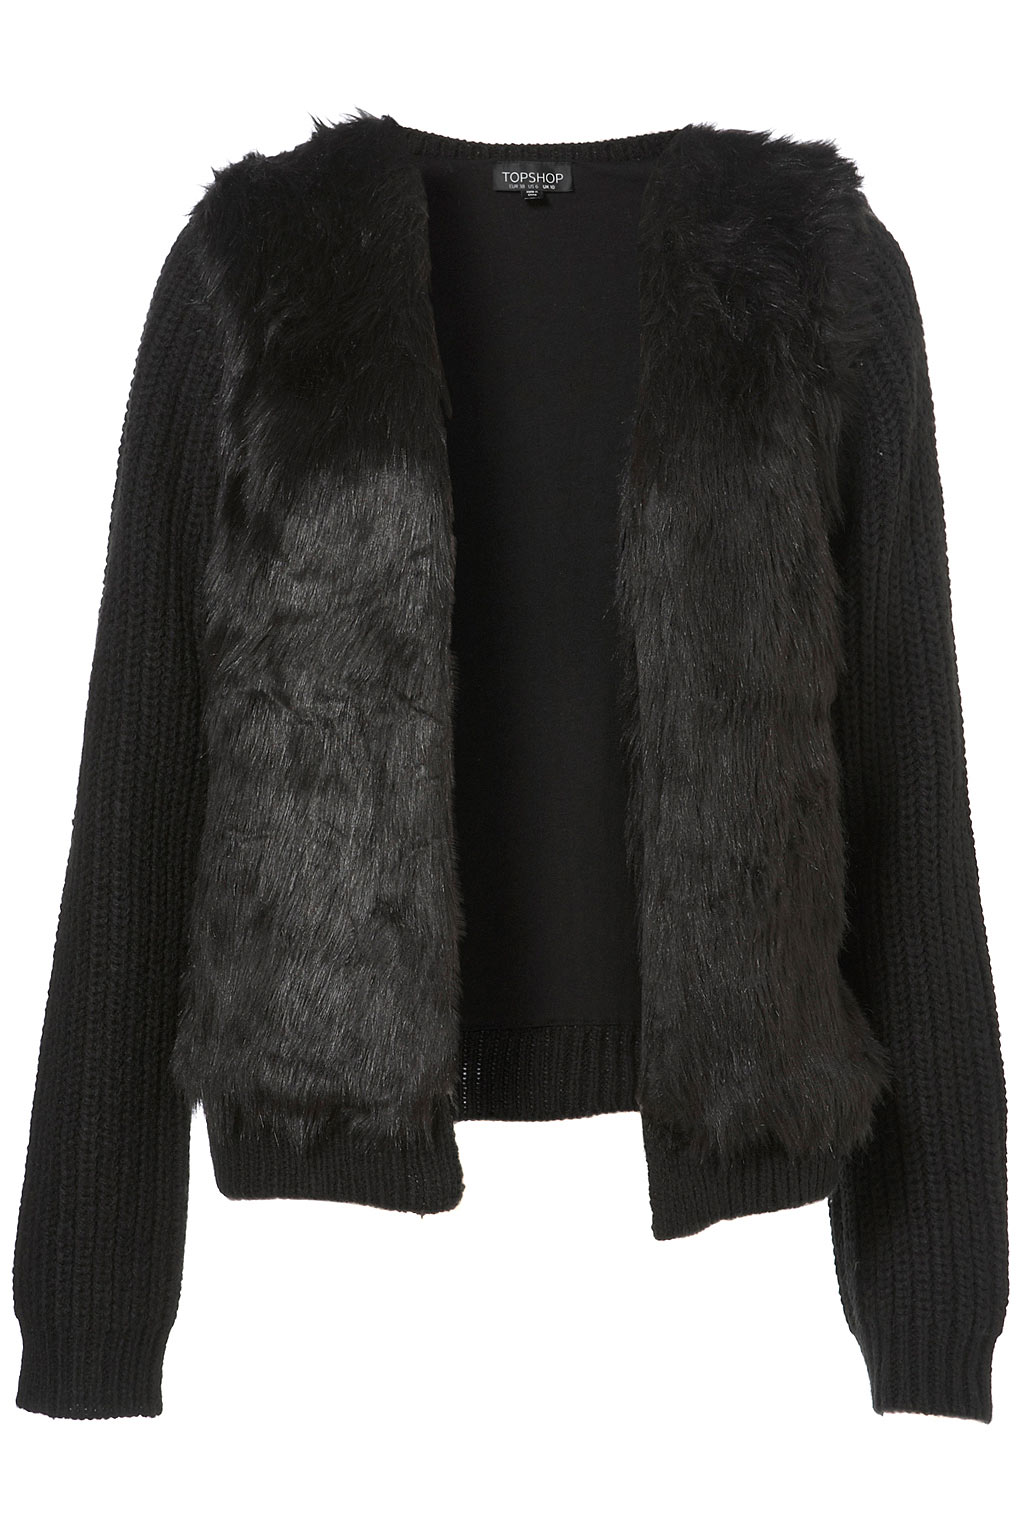 Lyst - Topshop Knitted Faux Fur Trim Cardigan in Black